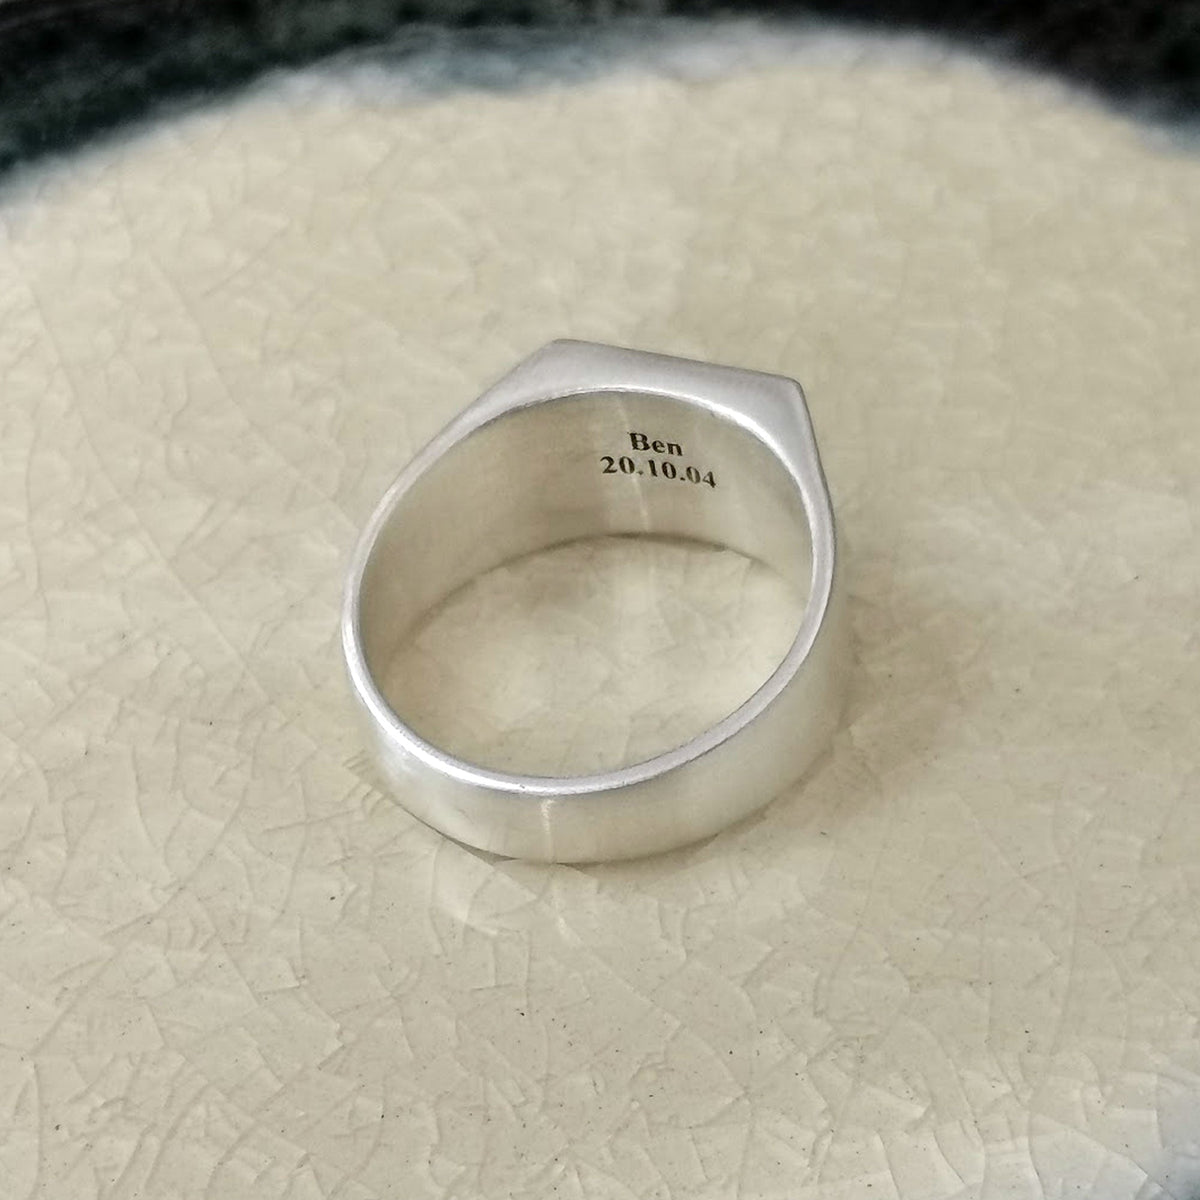 inside sterling silver signet ring engraving 21st birthday gift idea for men